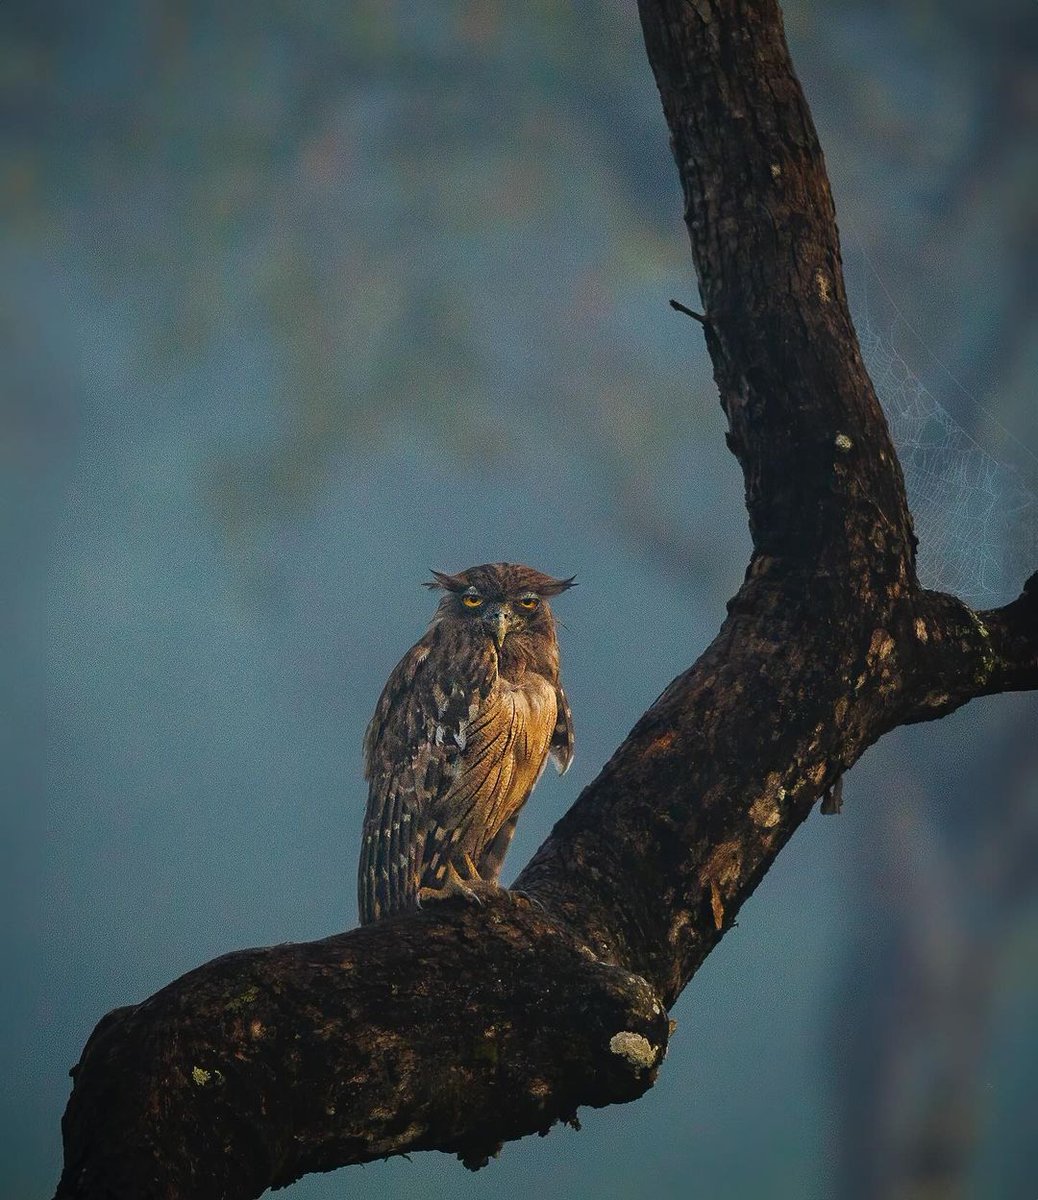 Brown fish owl photographed during safari by Jijo Varghese #bandipur #owl #brownfishowl #birdsofindia #travelphotography #wildlife #naturephotography #nature #BirdsOfTwitter #indiaves #birdphotography